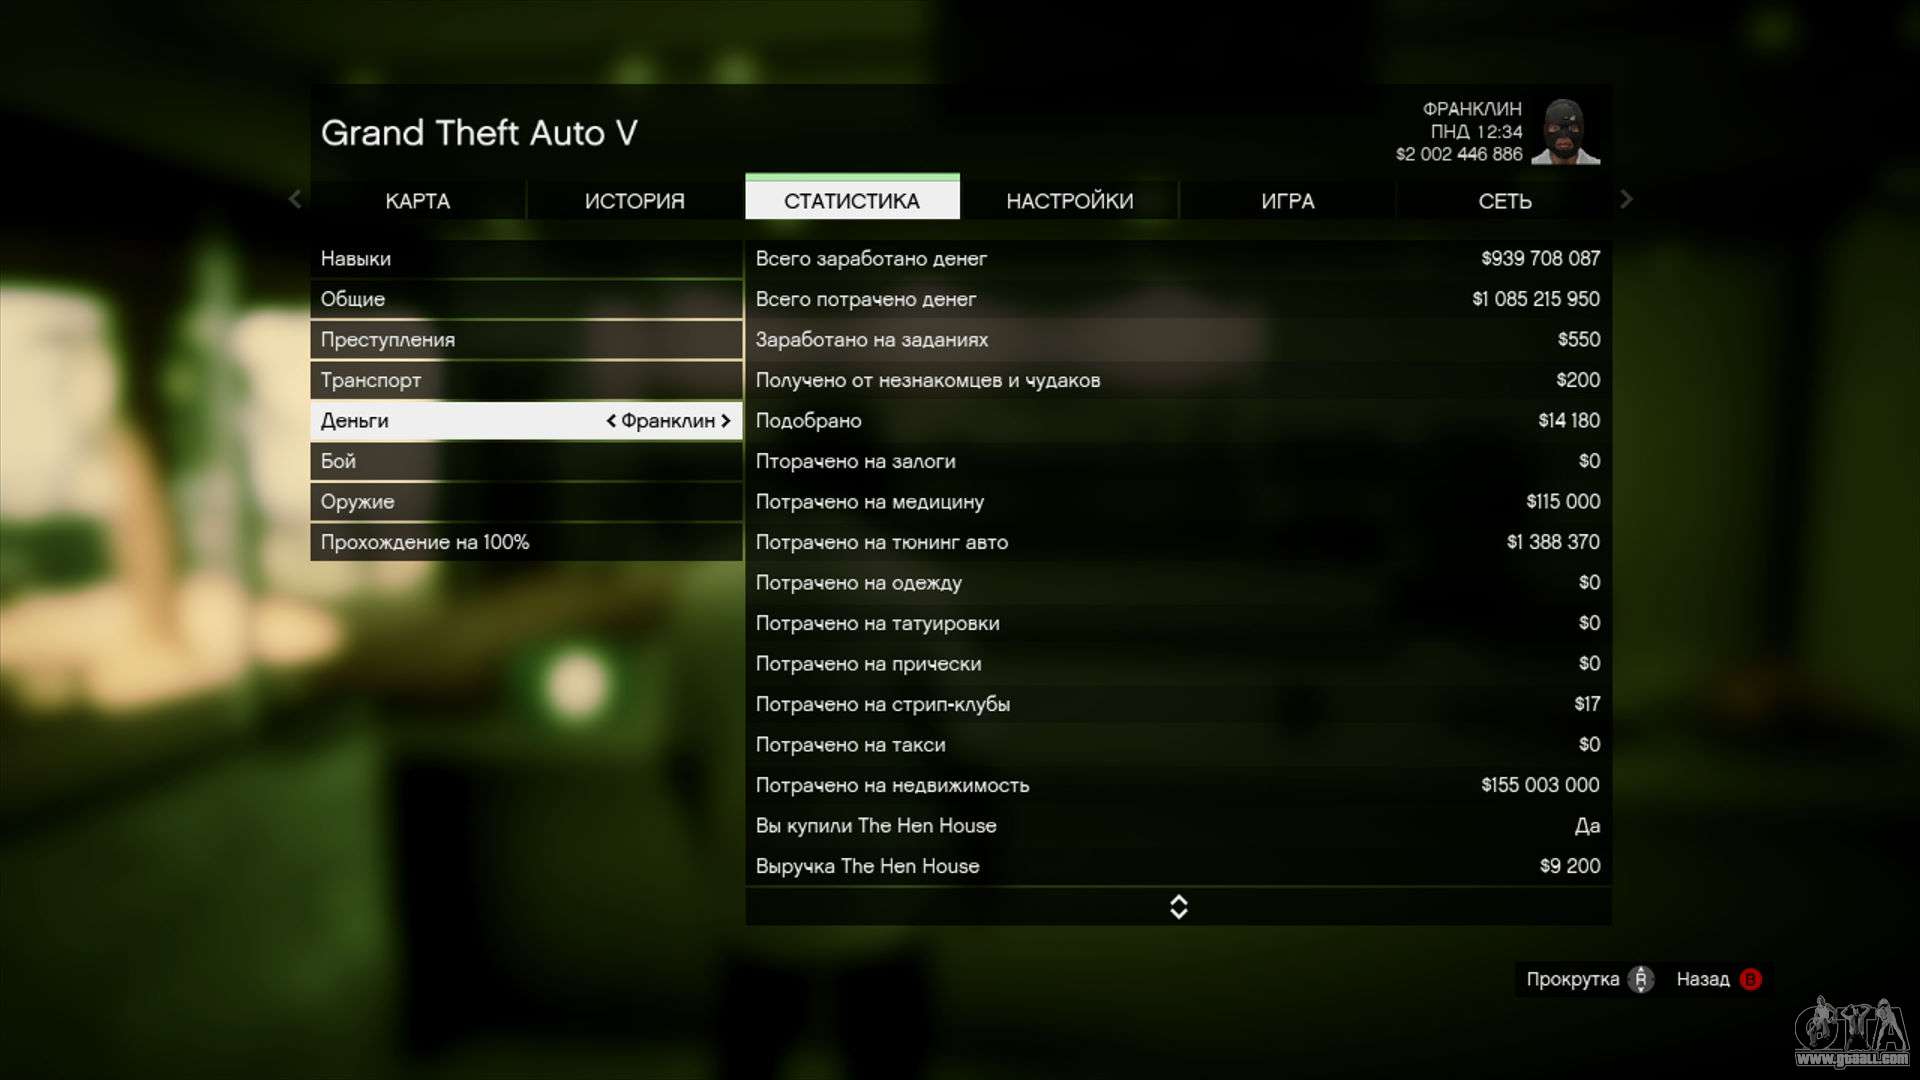 Drama Ontdekking Misverstand Save GTA 5 100% and 1 billion Xbox 360 for GTA 5